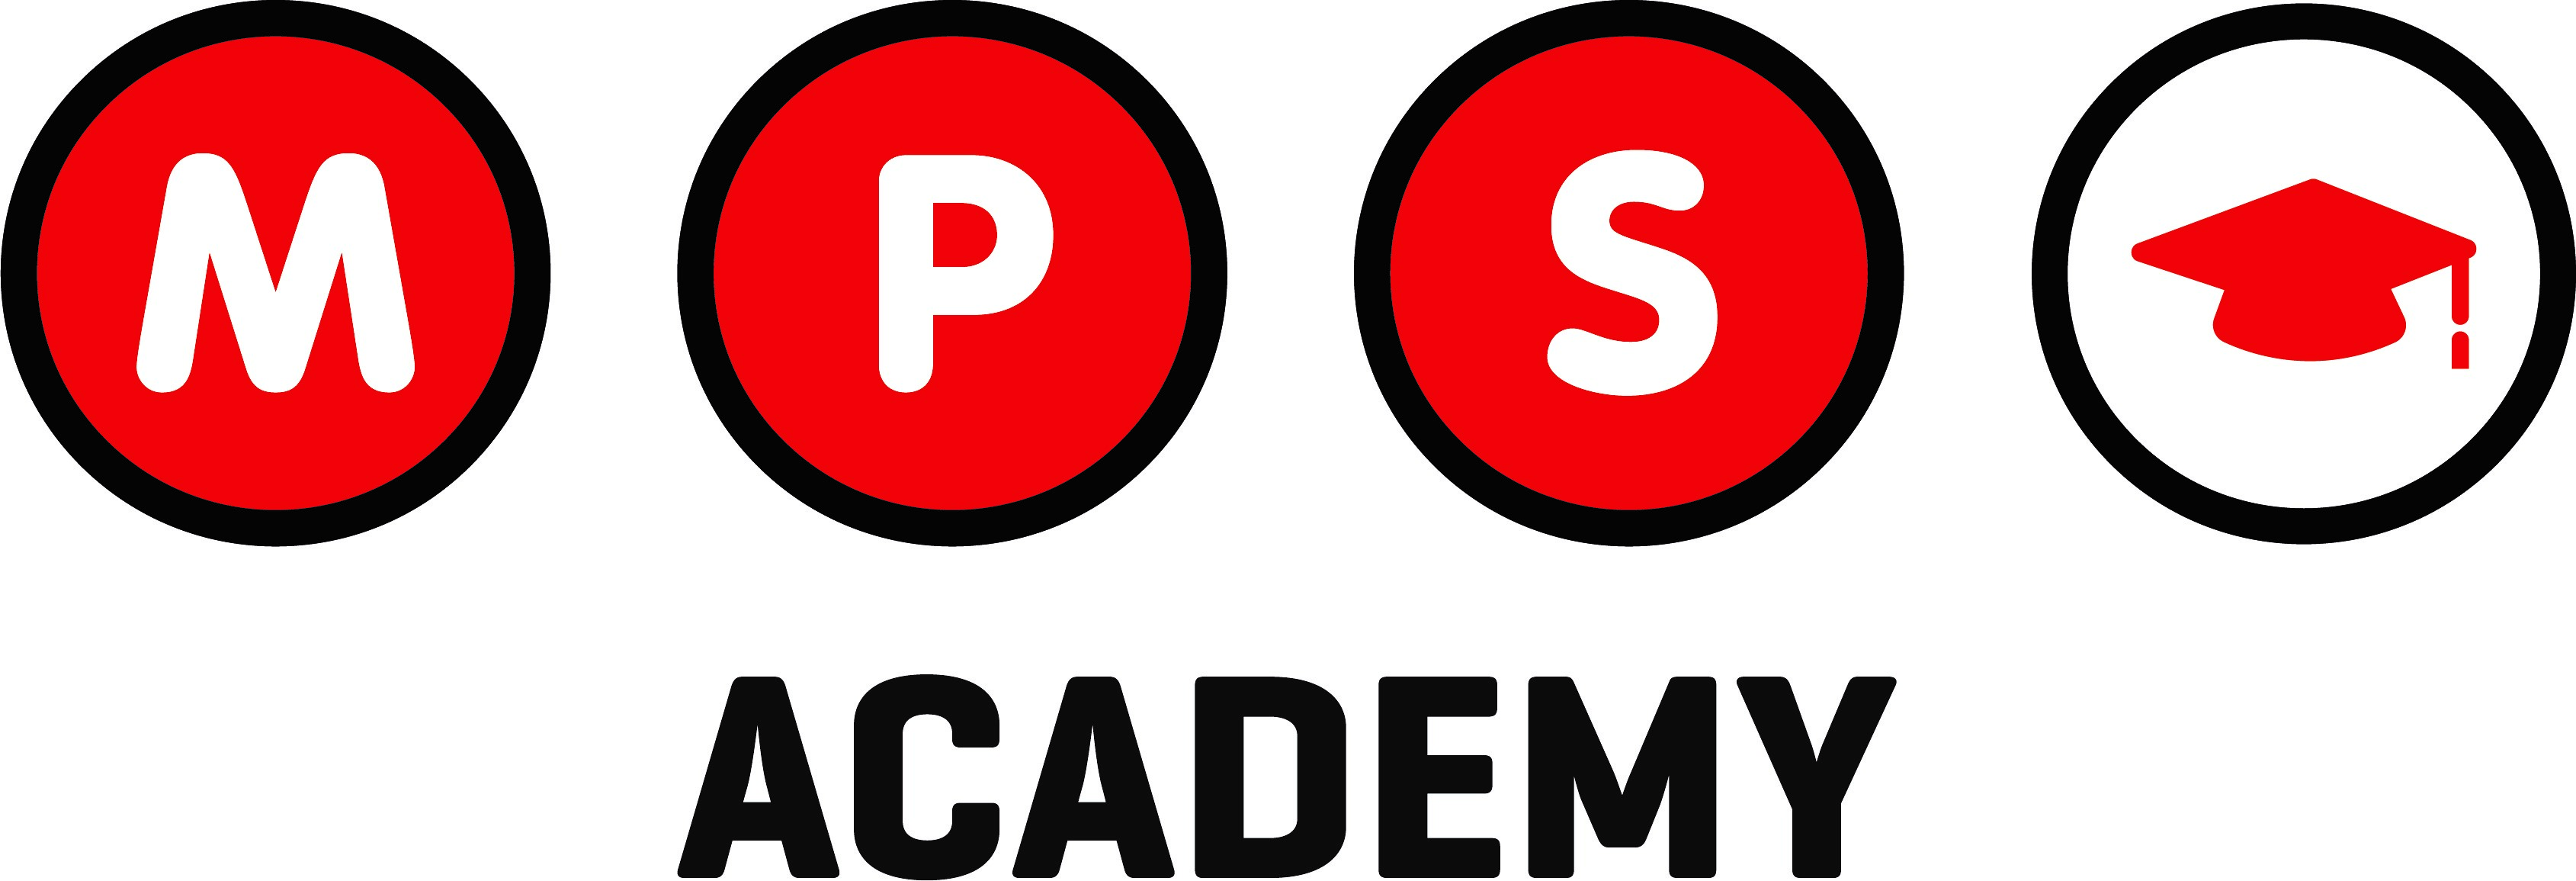 MPS academy 